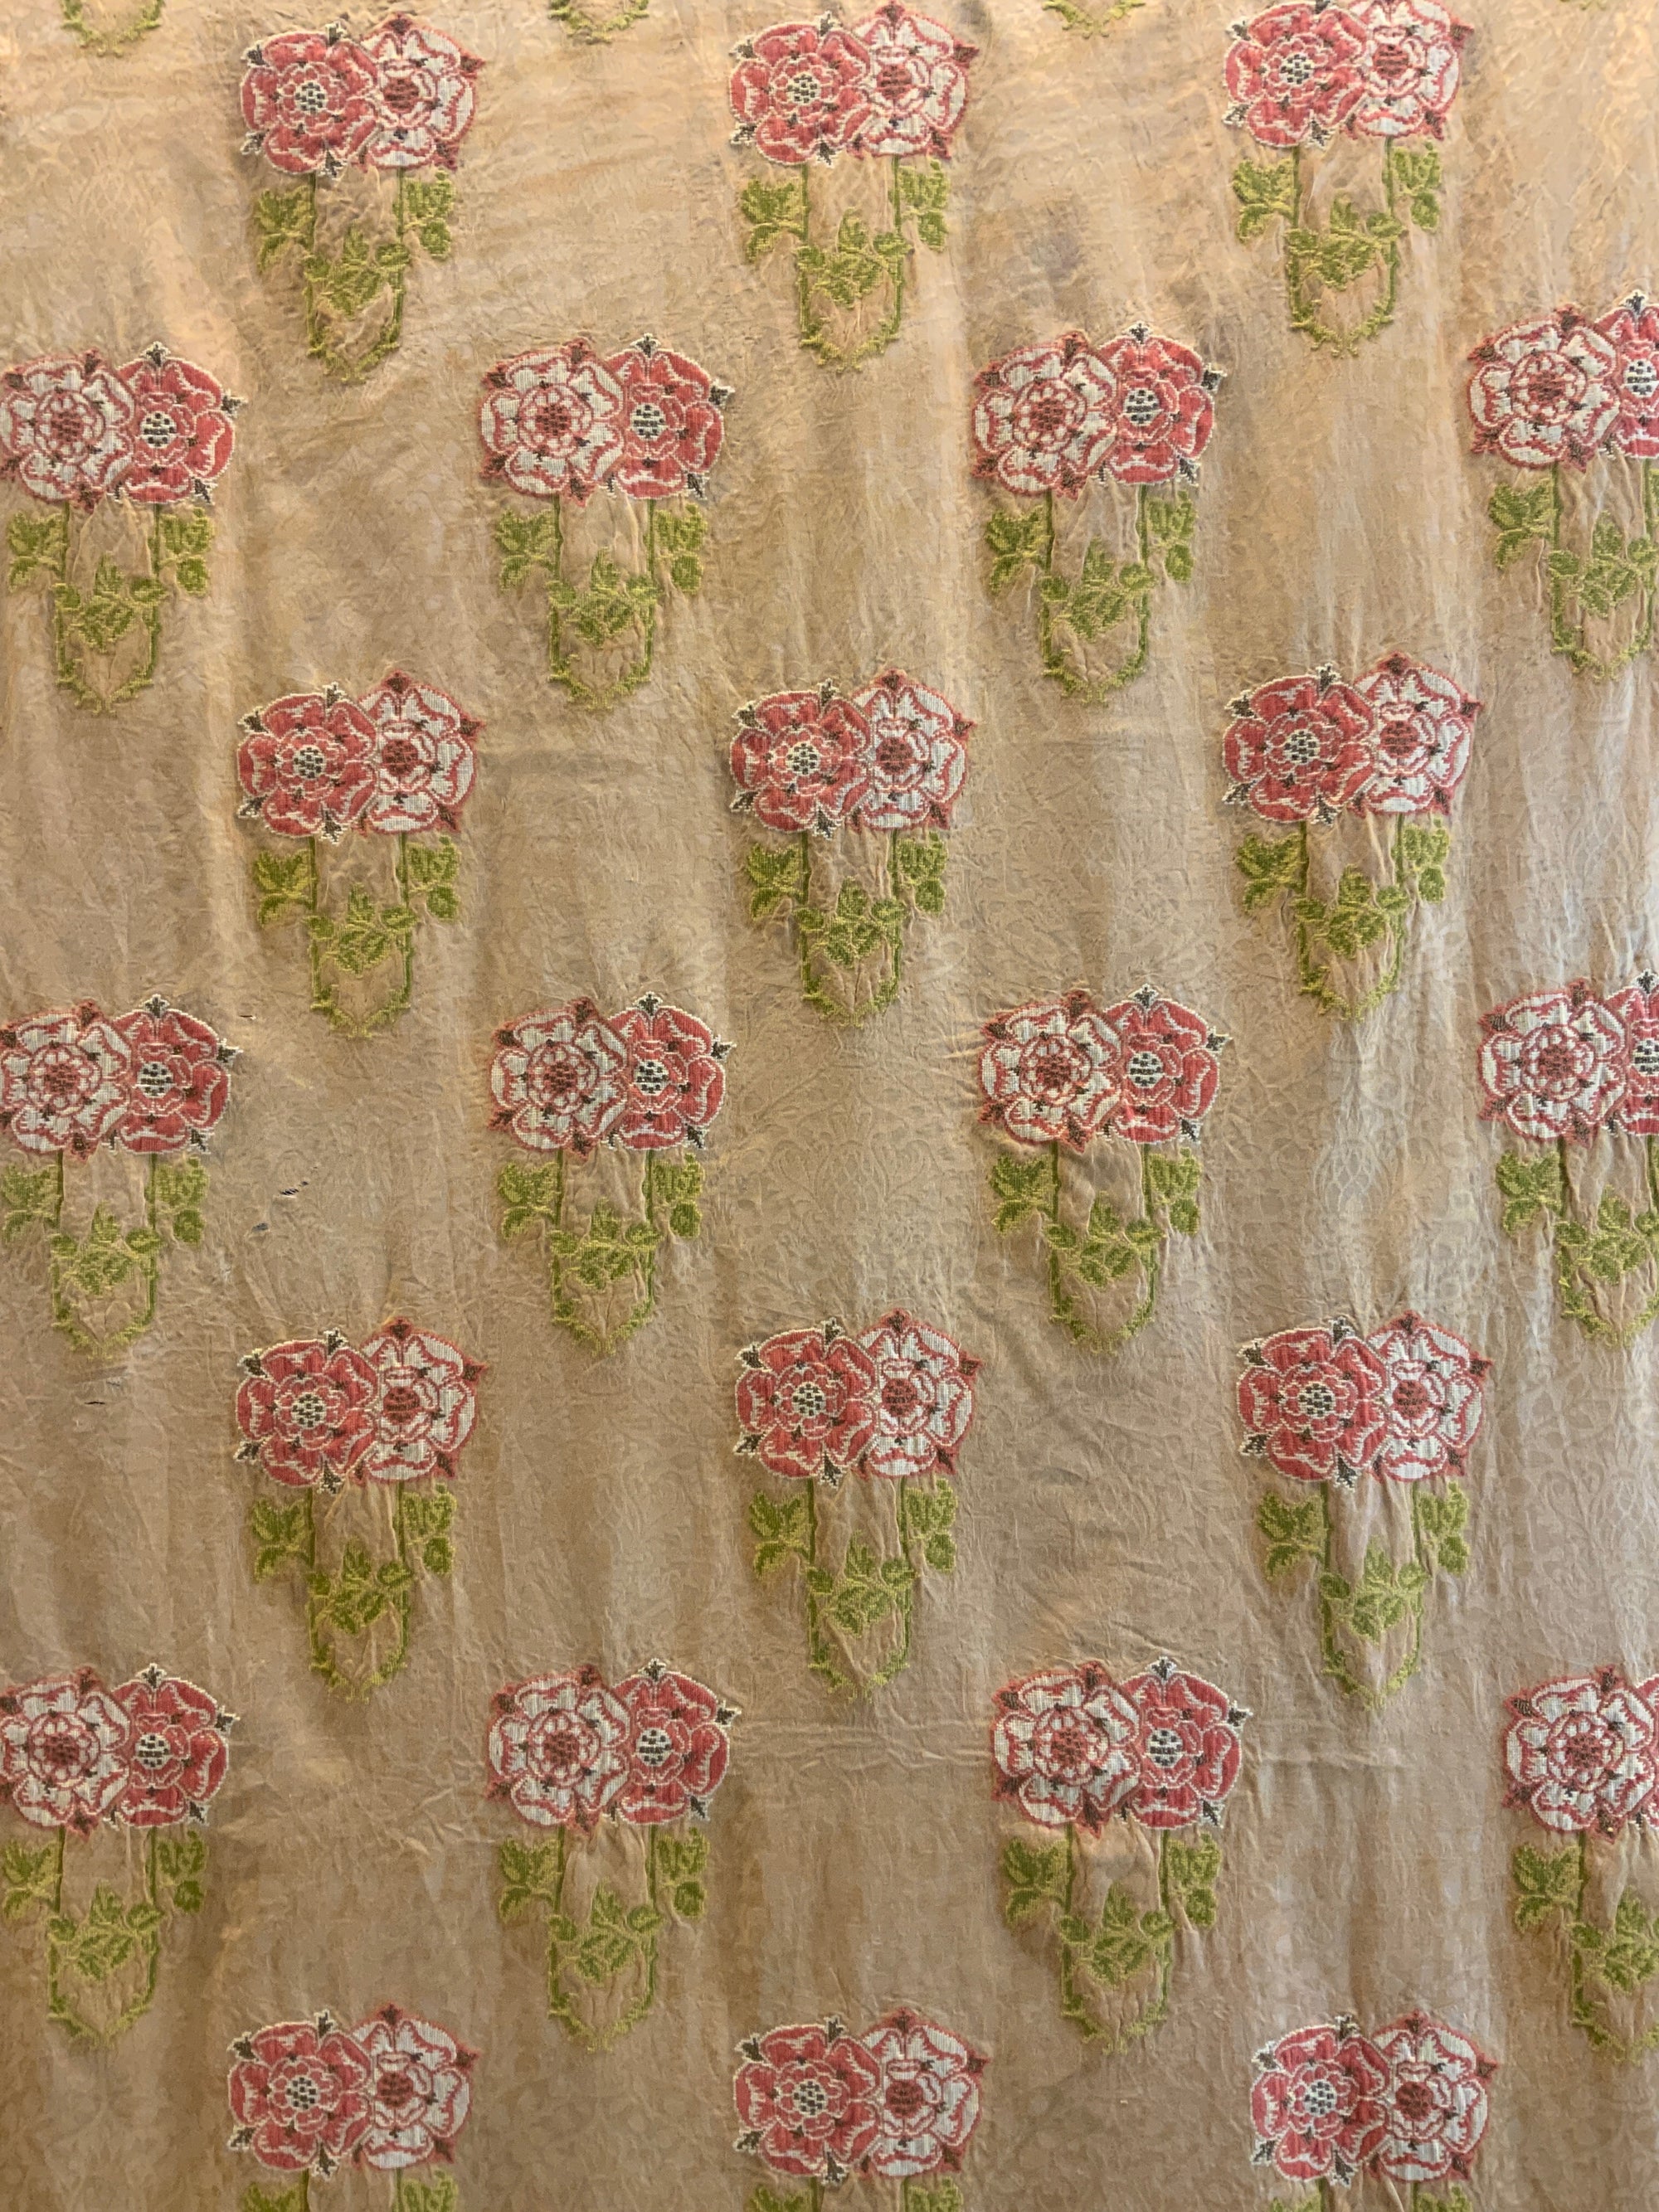 Tudor rose silk brocade (230 x 123cm)